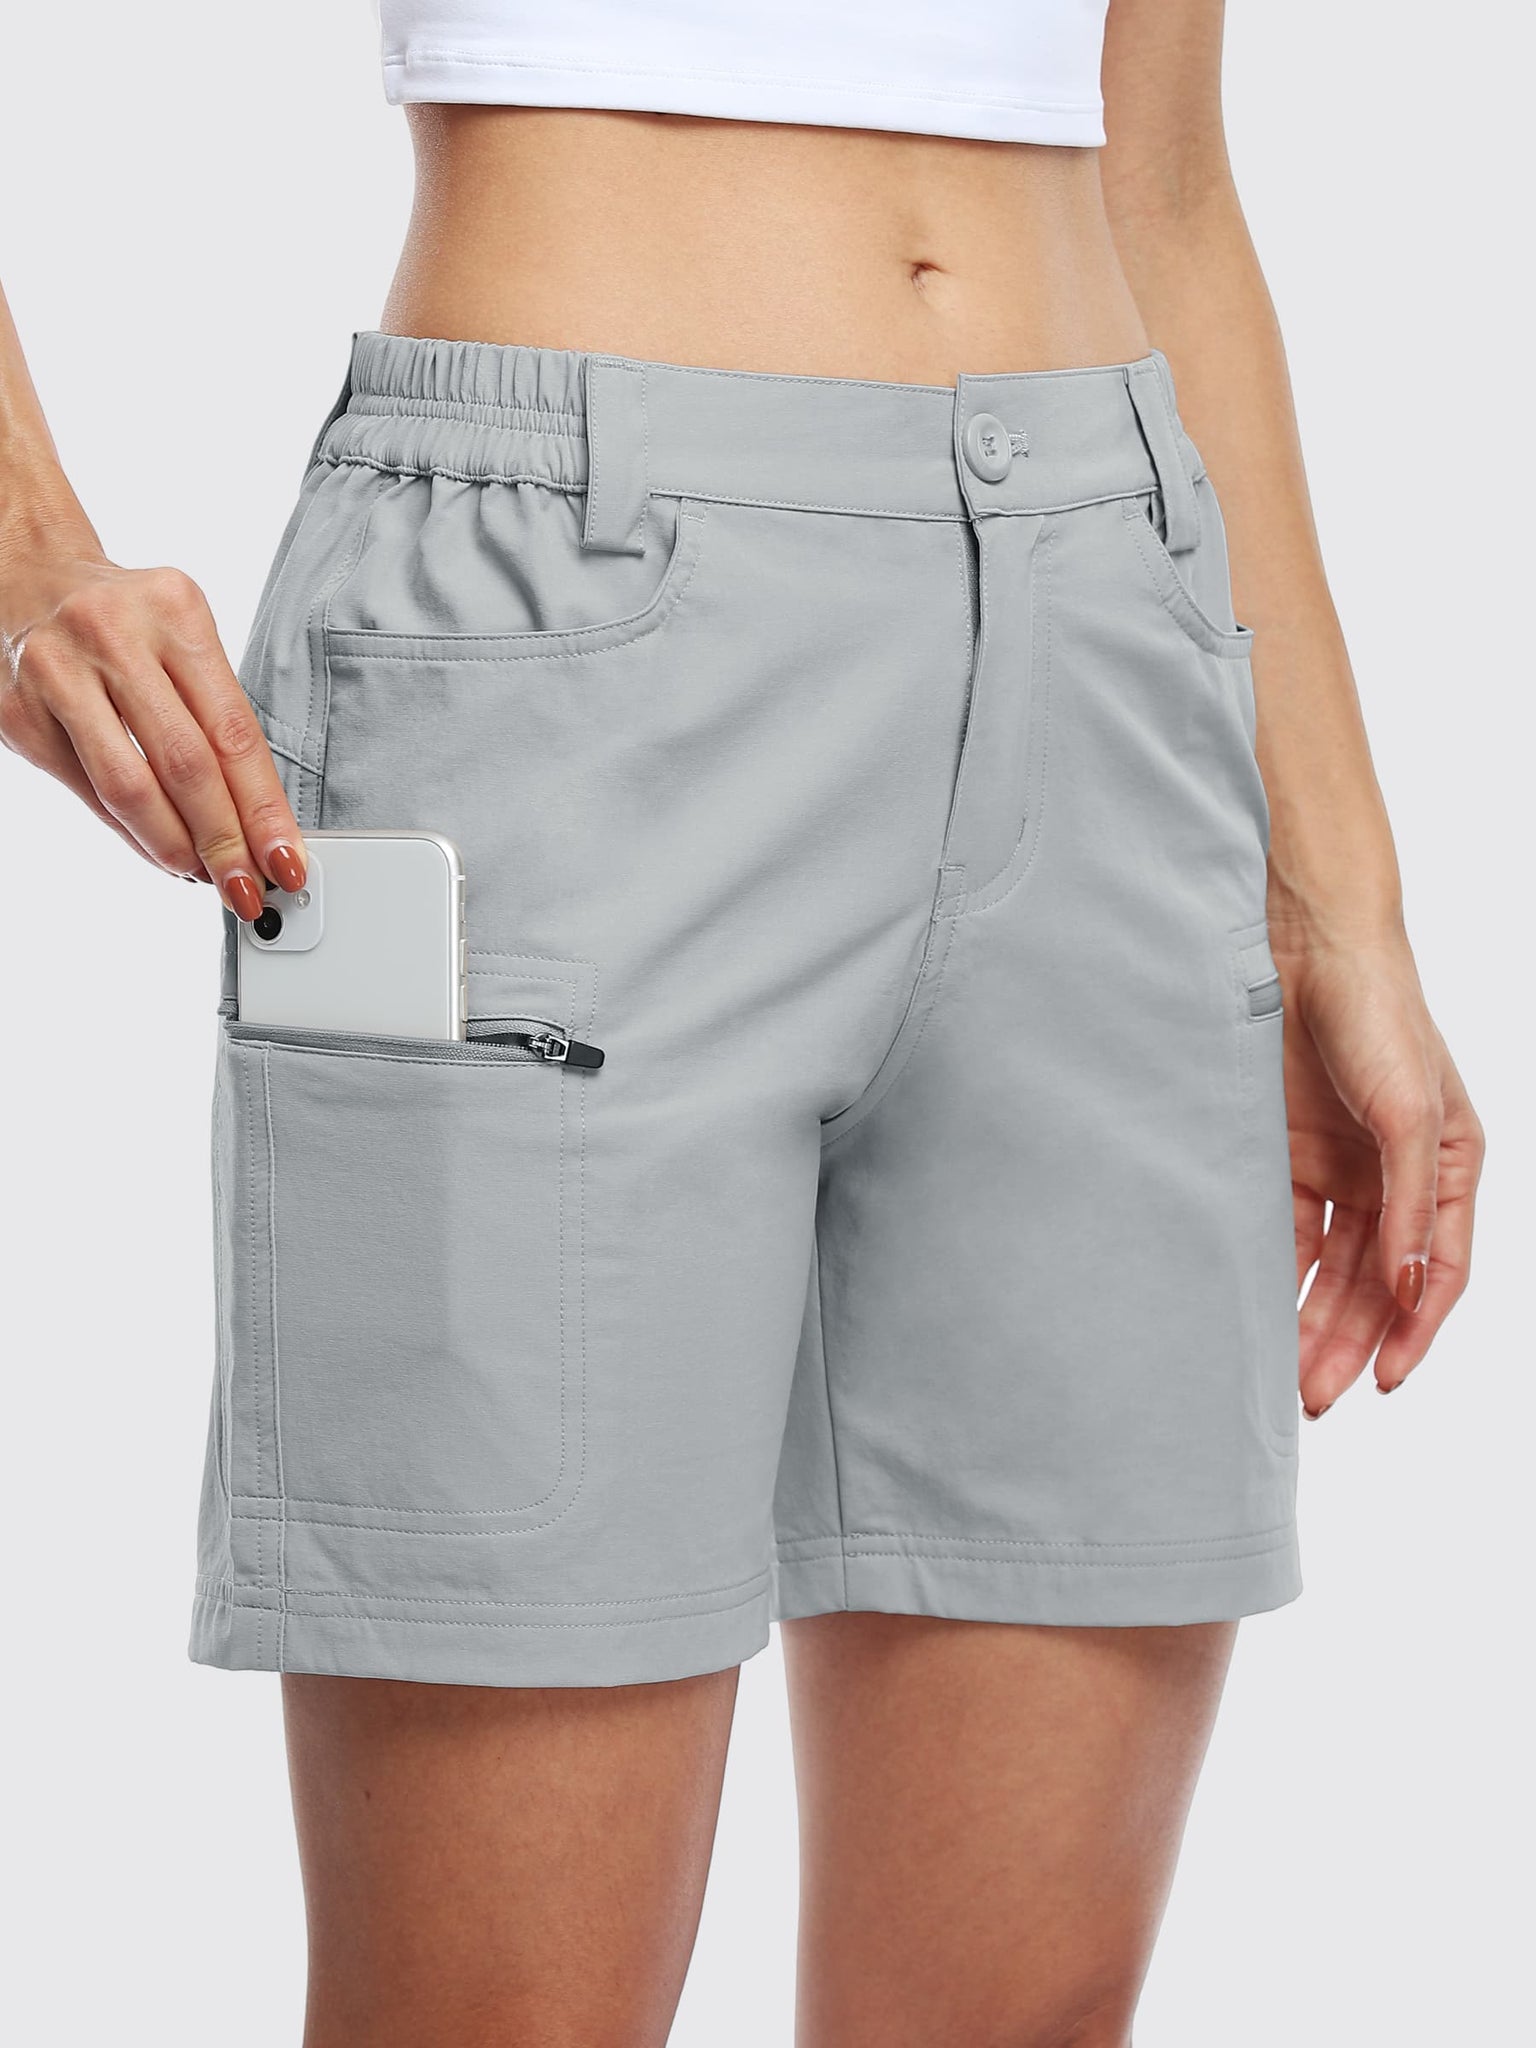 Willit Women's Outdoor Cargo Shorts 6 Inseam_LightGray_model4